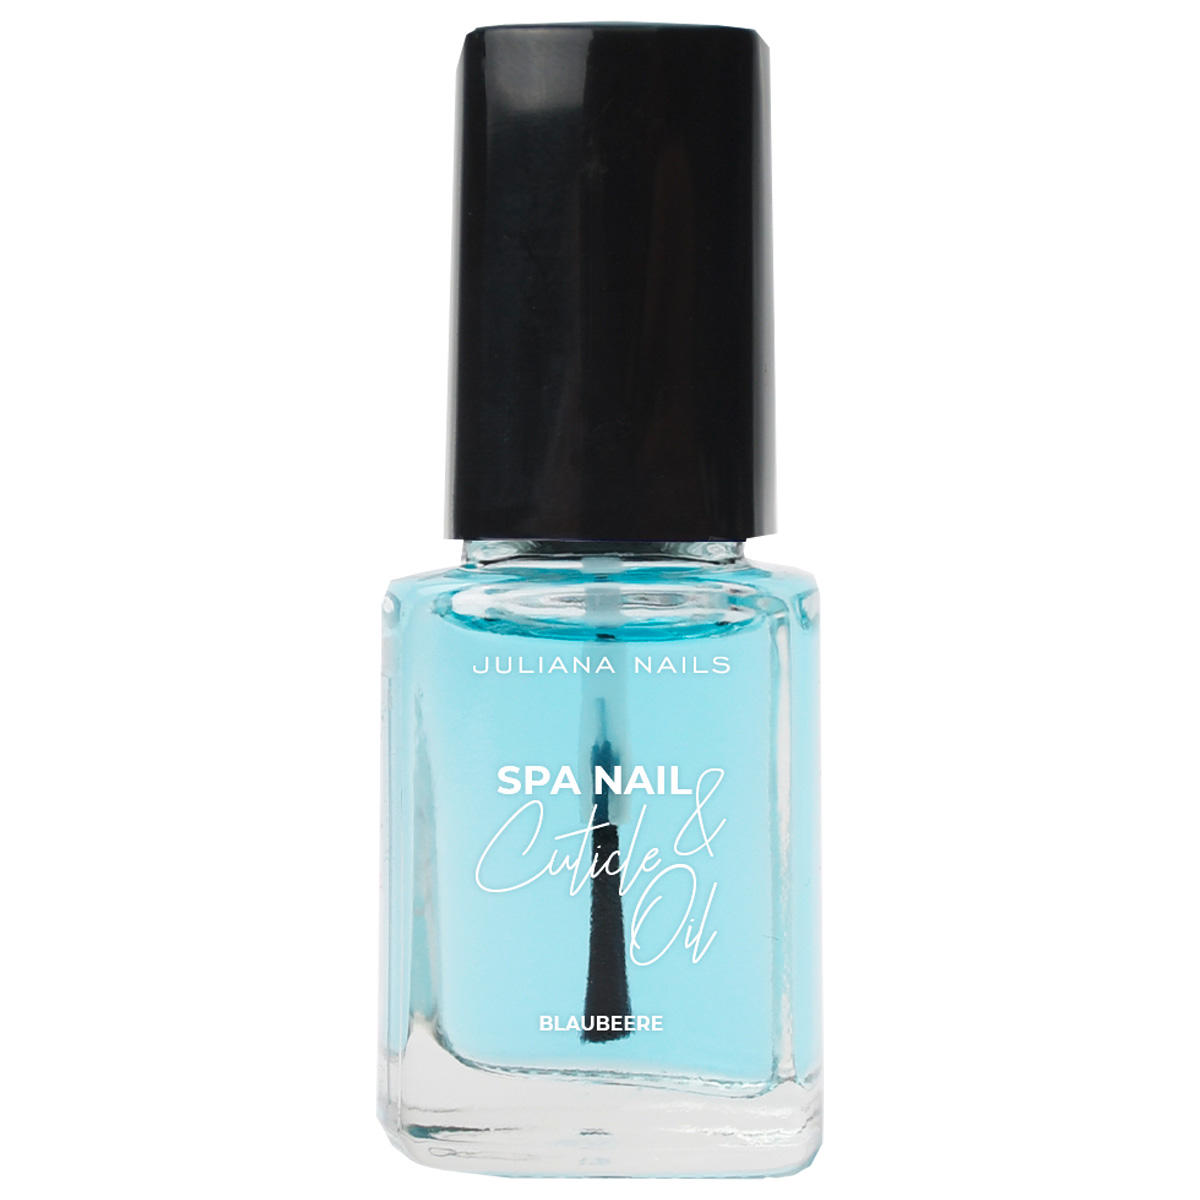 Juliana Nails SPA Nail & Cuticle Oil Blaubeere 10 ml